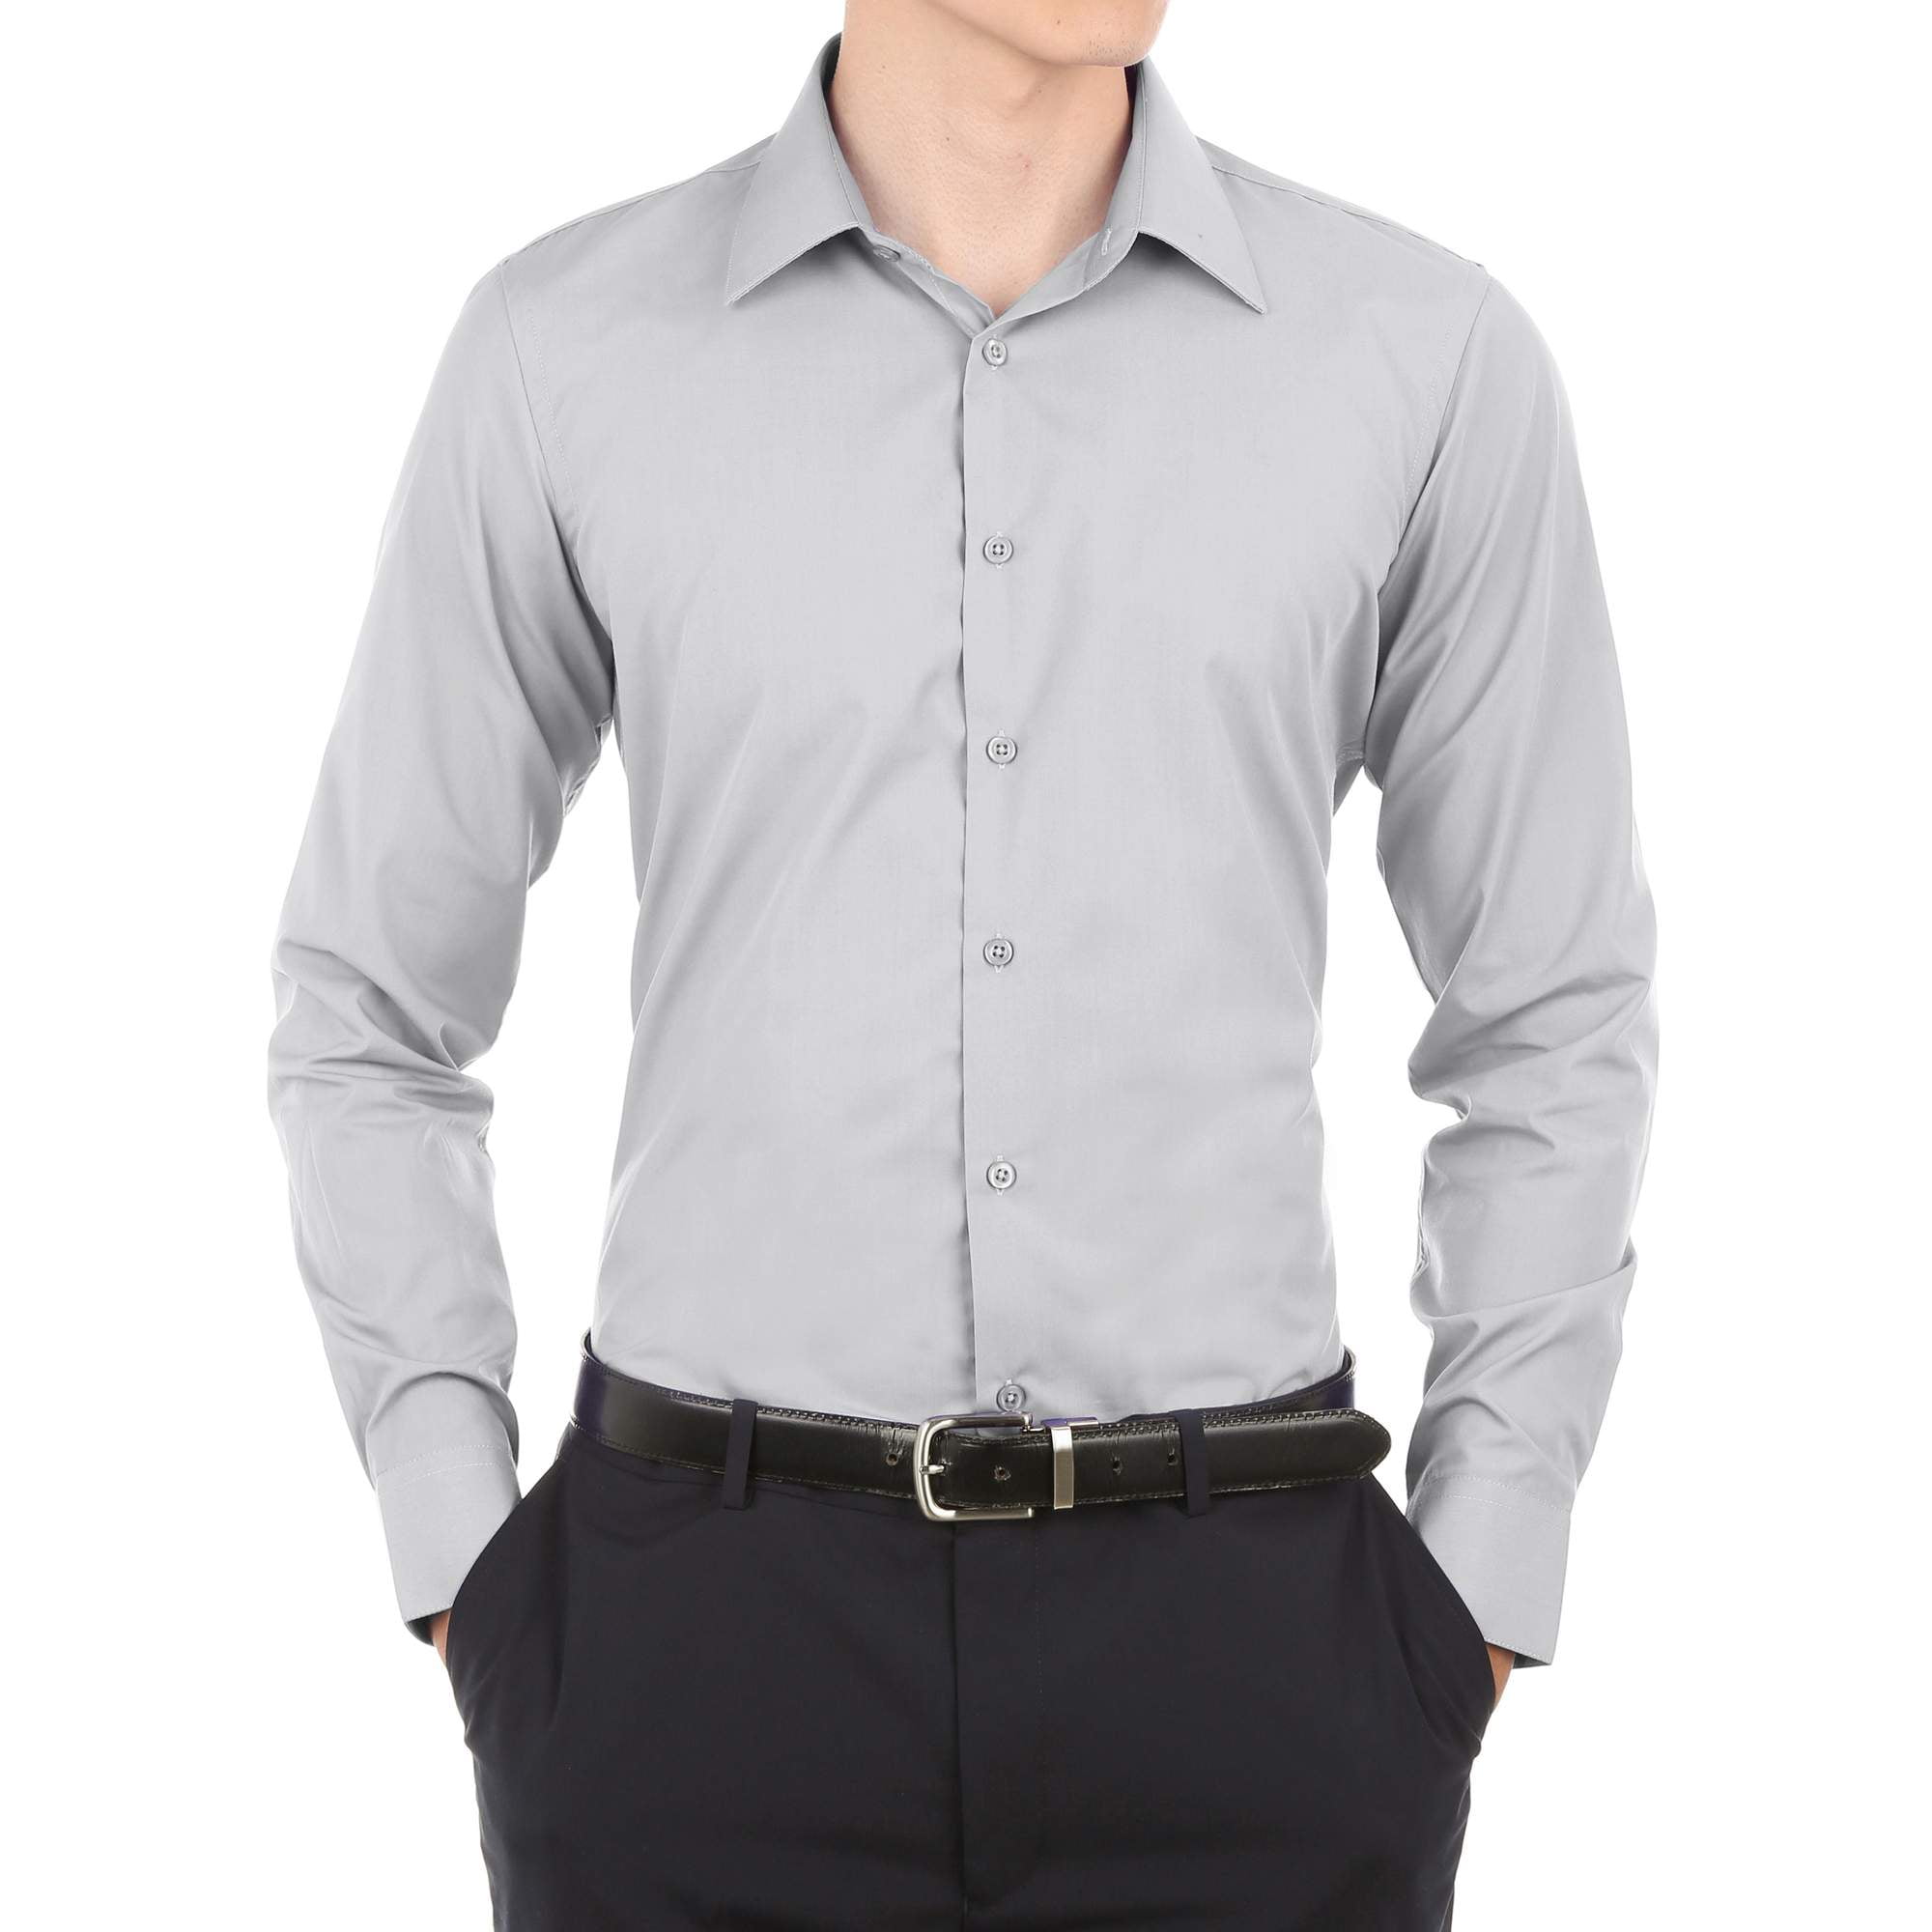 Men’s Grey Slim Fit Long Sleeves Dress Shirt - Walmart.com